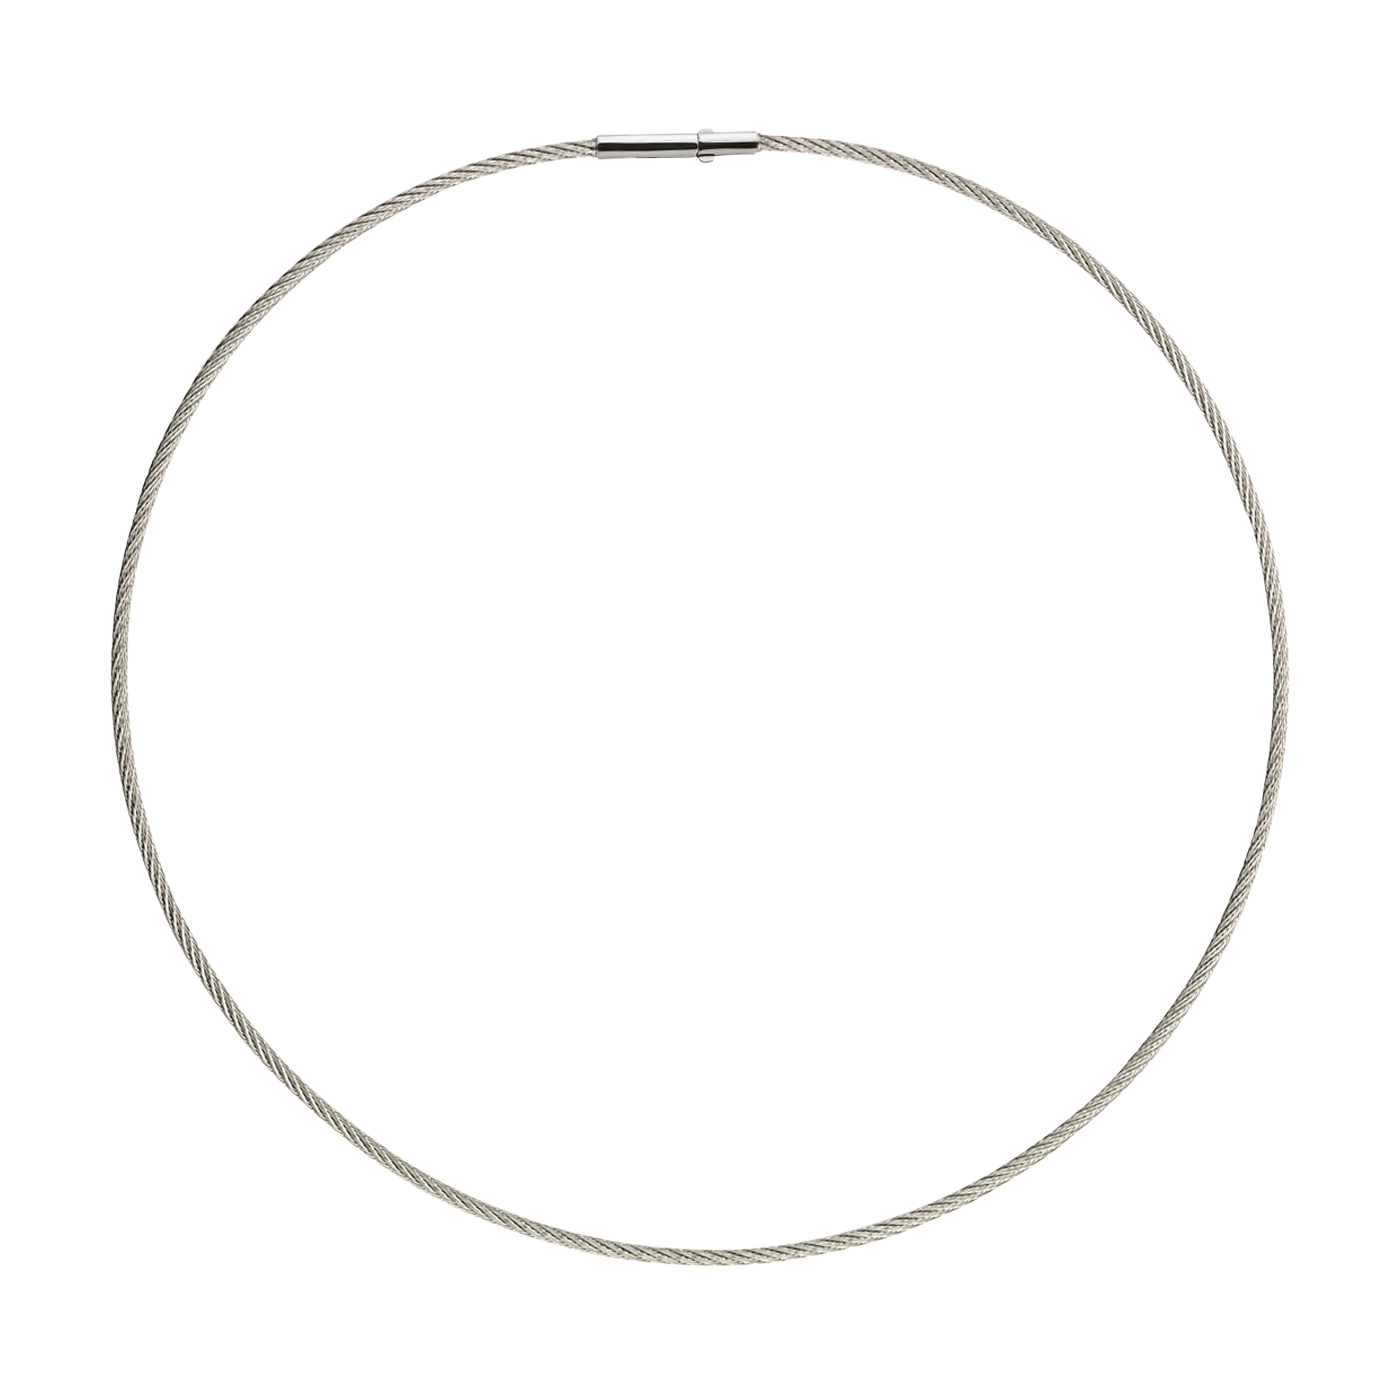 Rope Necklace, 1 Row, Double Clip Closure, ø 0.81 mm,45 cm - 1 piece